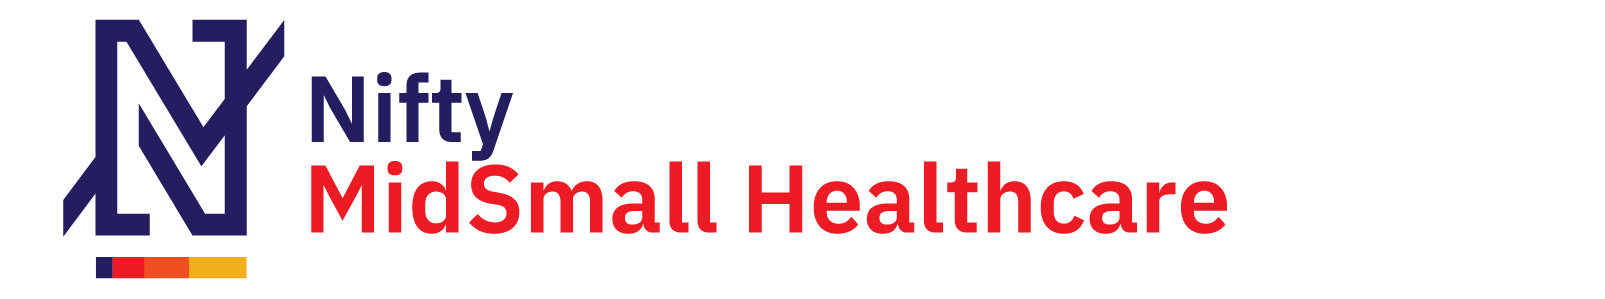 Nifty MidSmall Healthcare logo